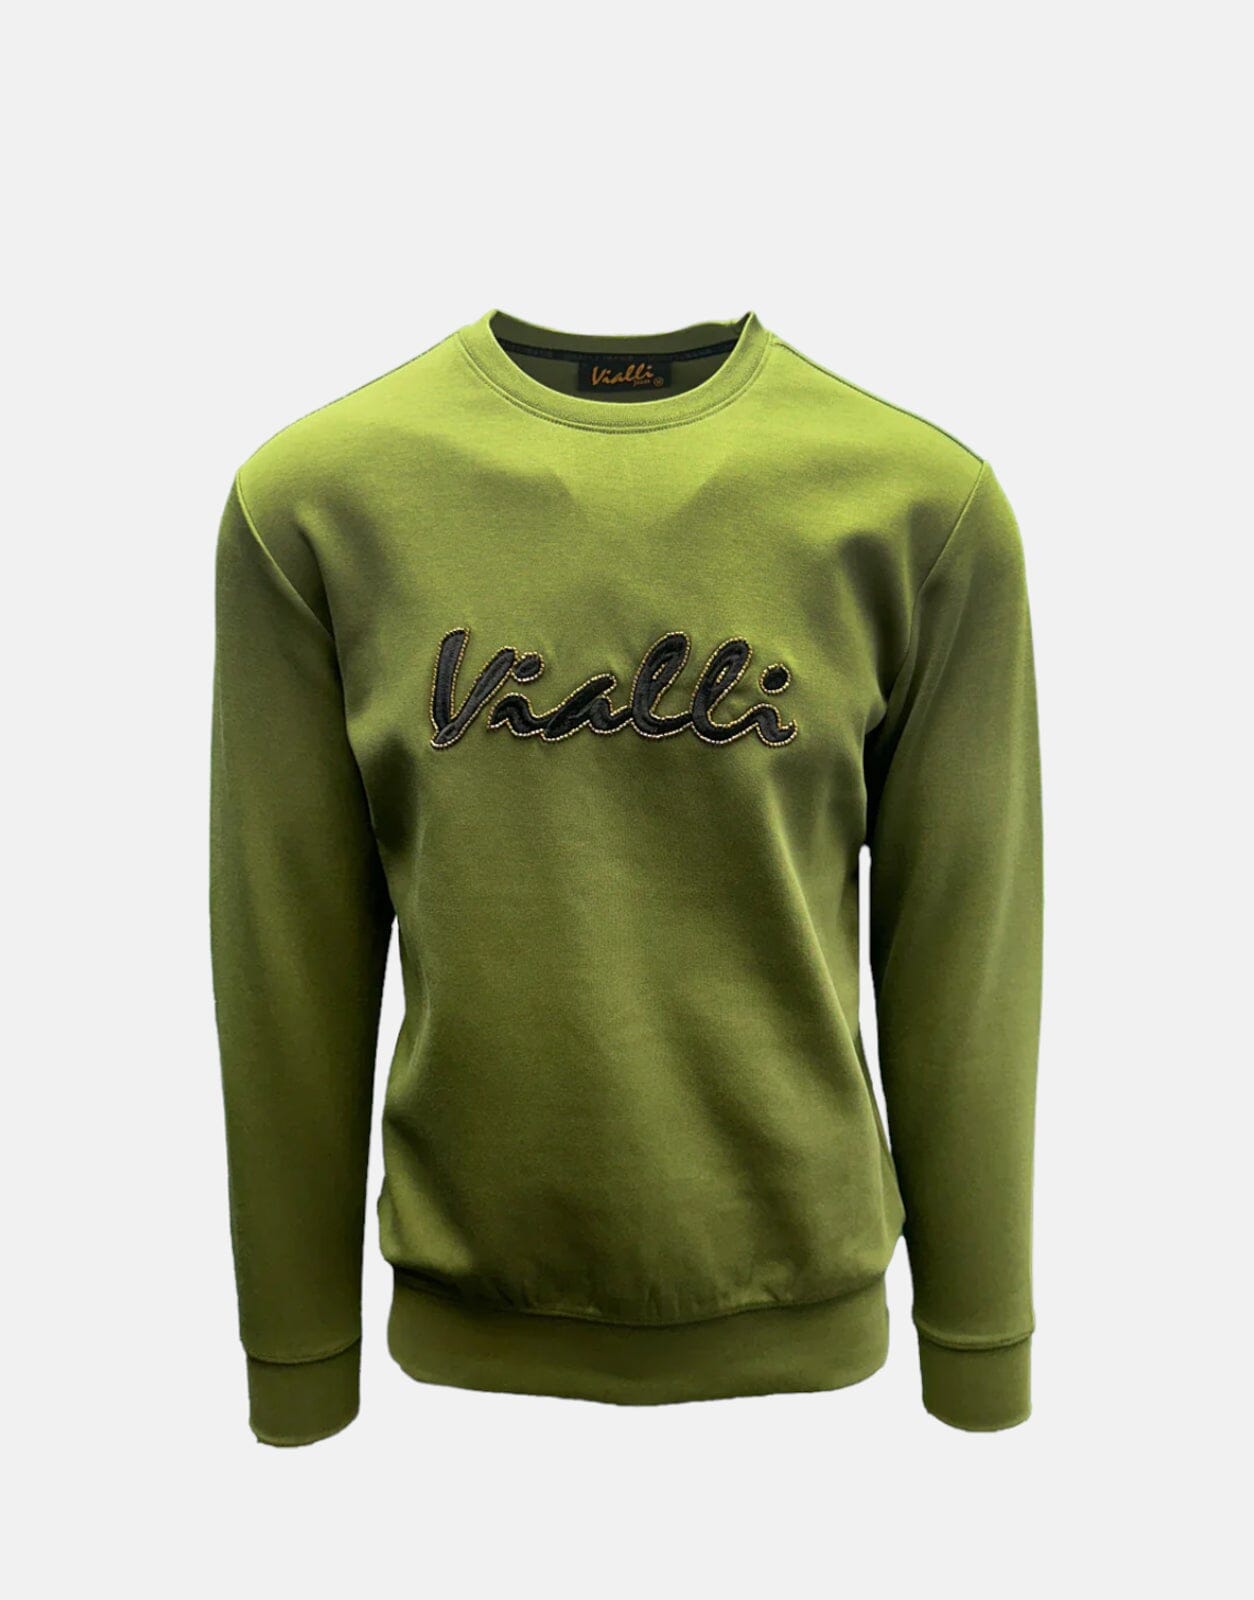 Vialli Gaspin Dark Green Sweatshirt - Subwear